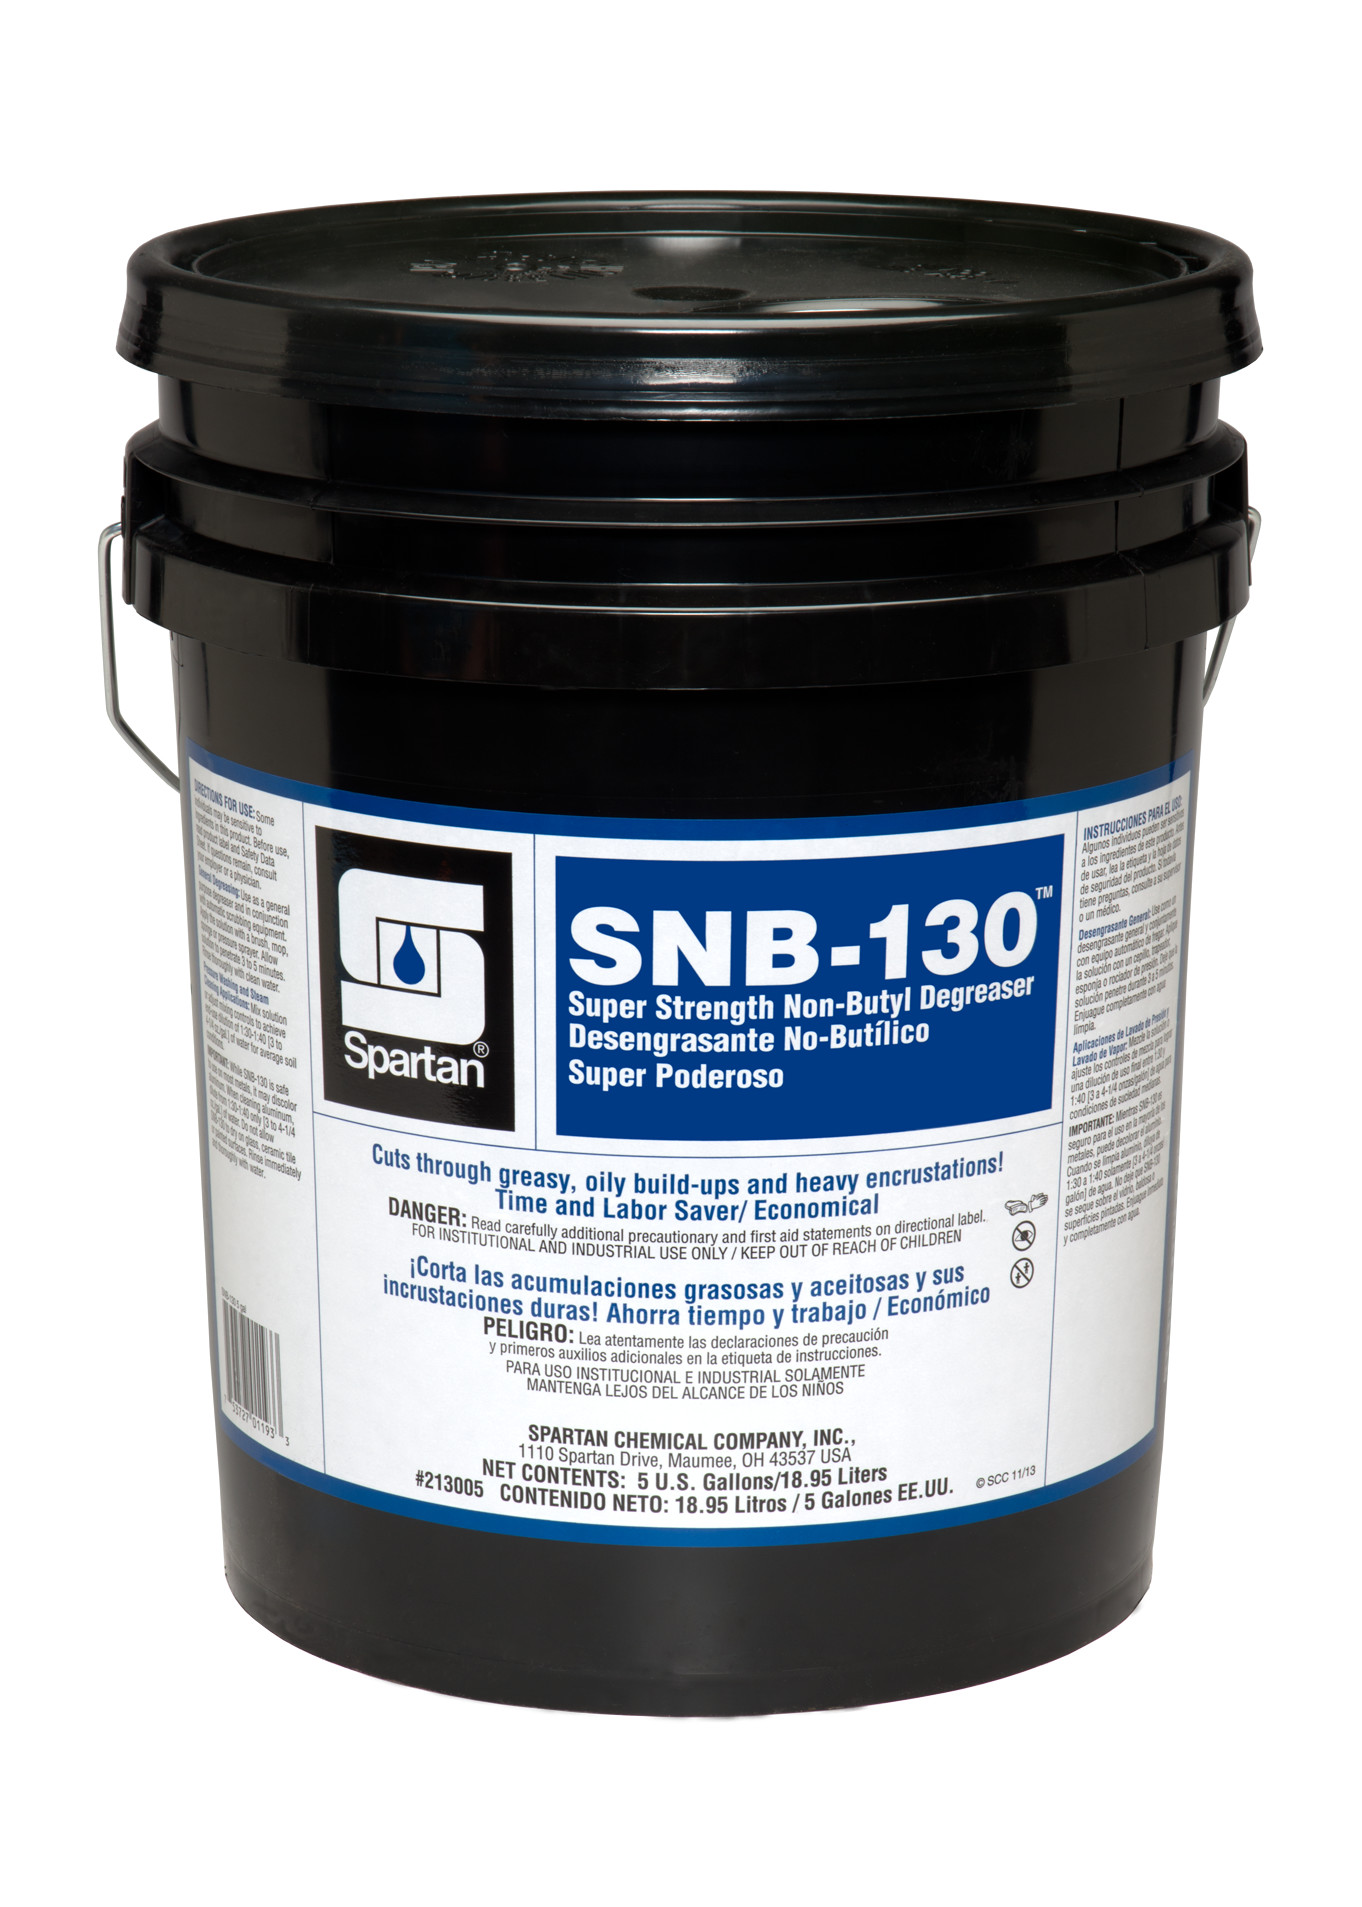 Spartan Chemical Company SNB-130, 5 GAL PAIL